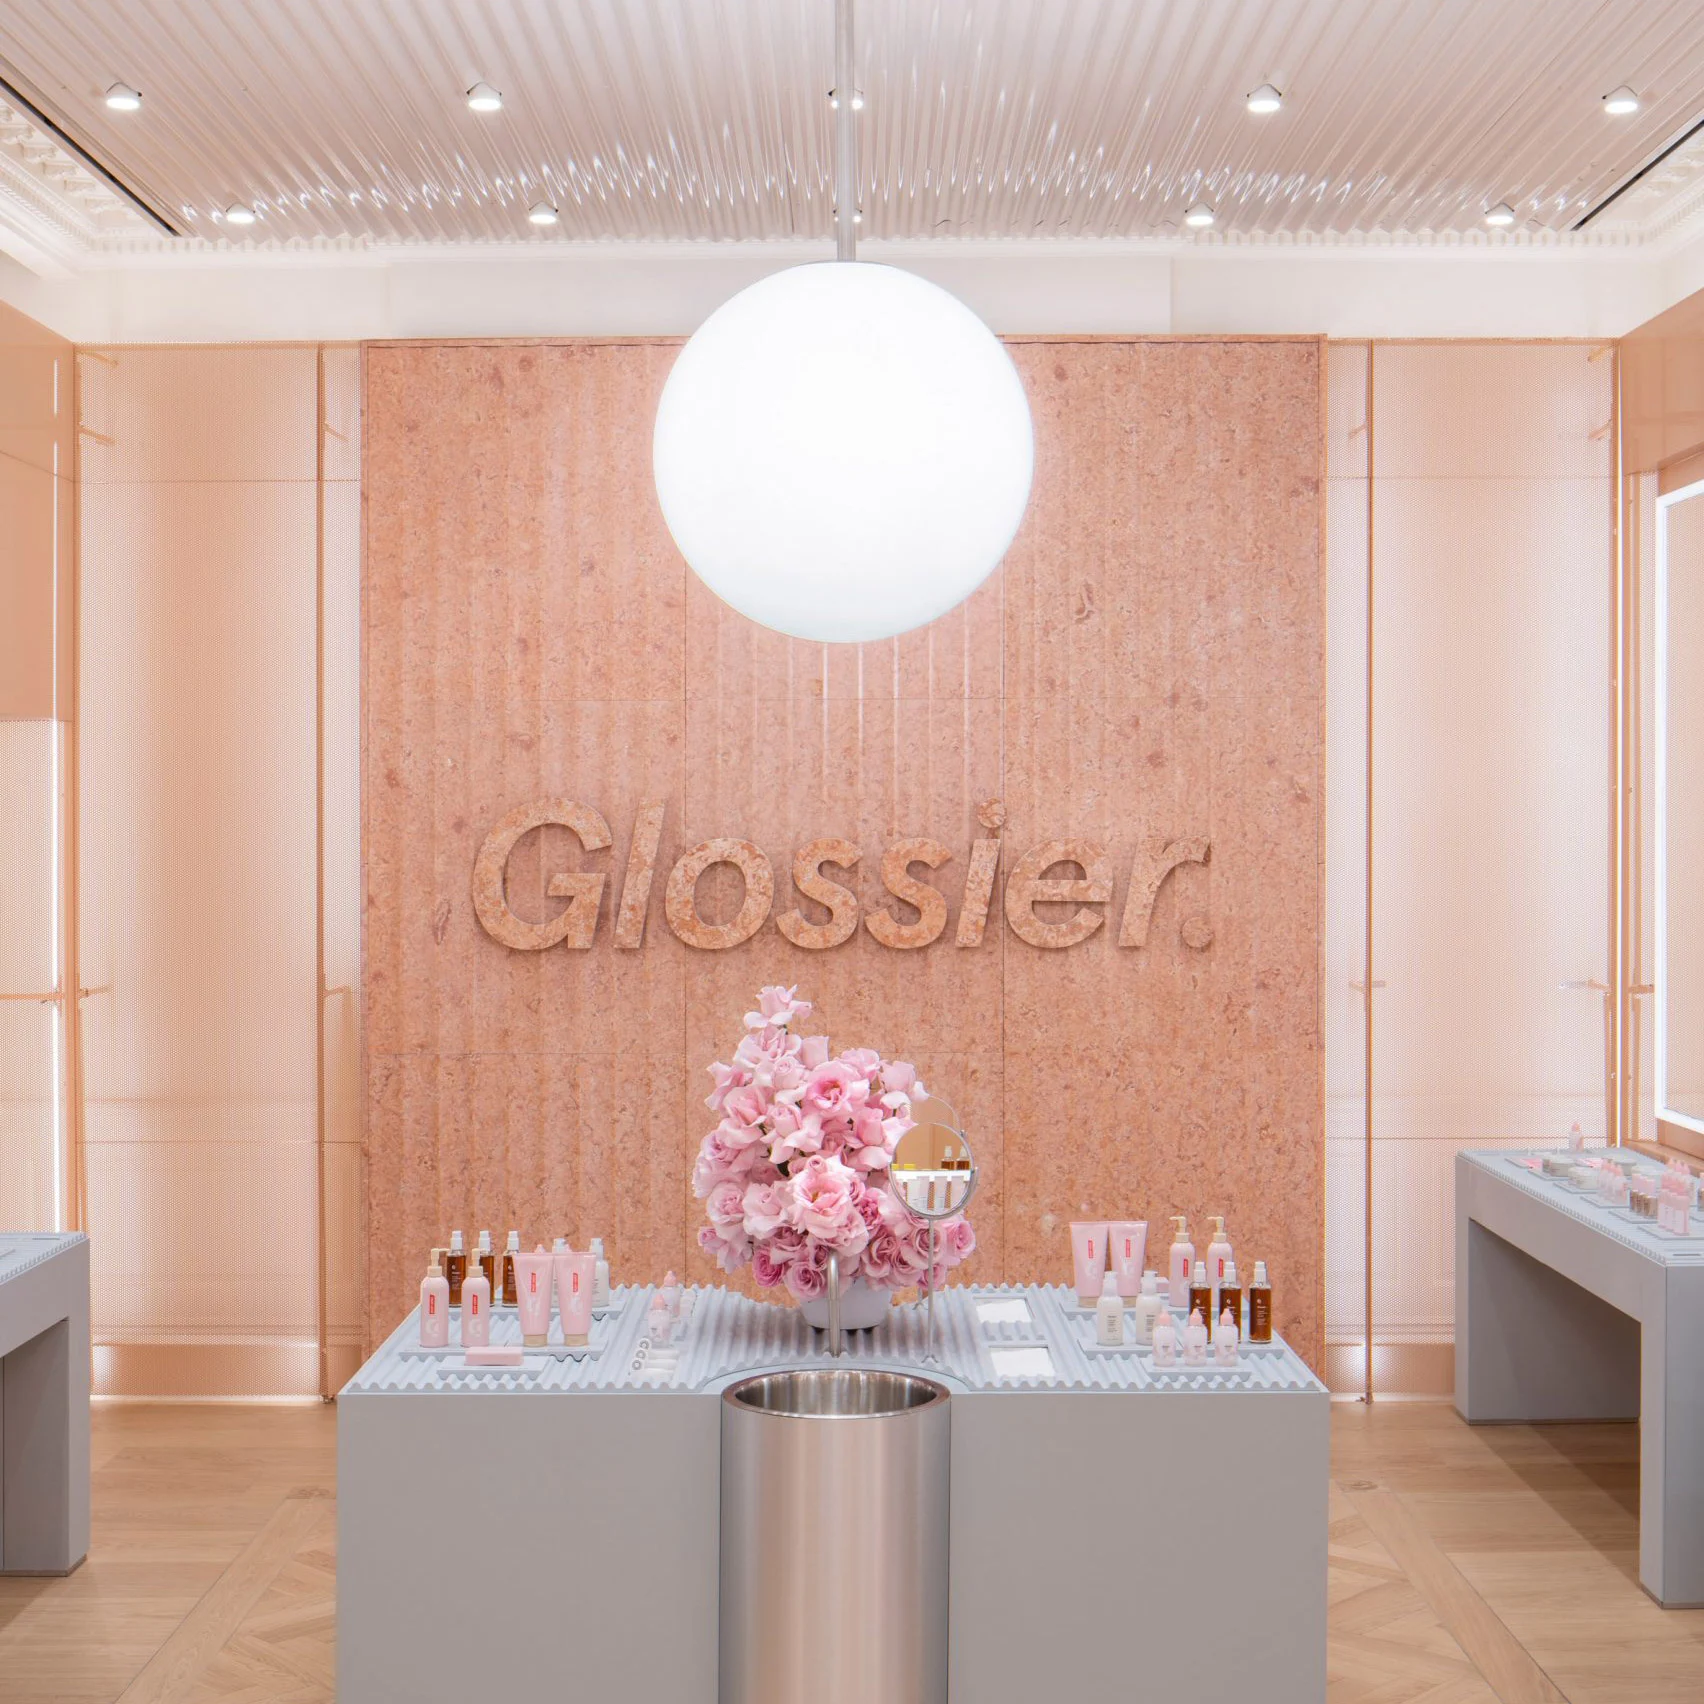 glossier-london-flagship-store-covent-garden-interiors_dezeen_2364_col_sq